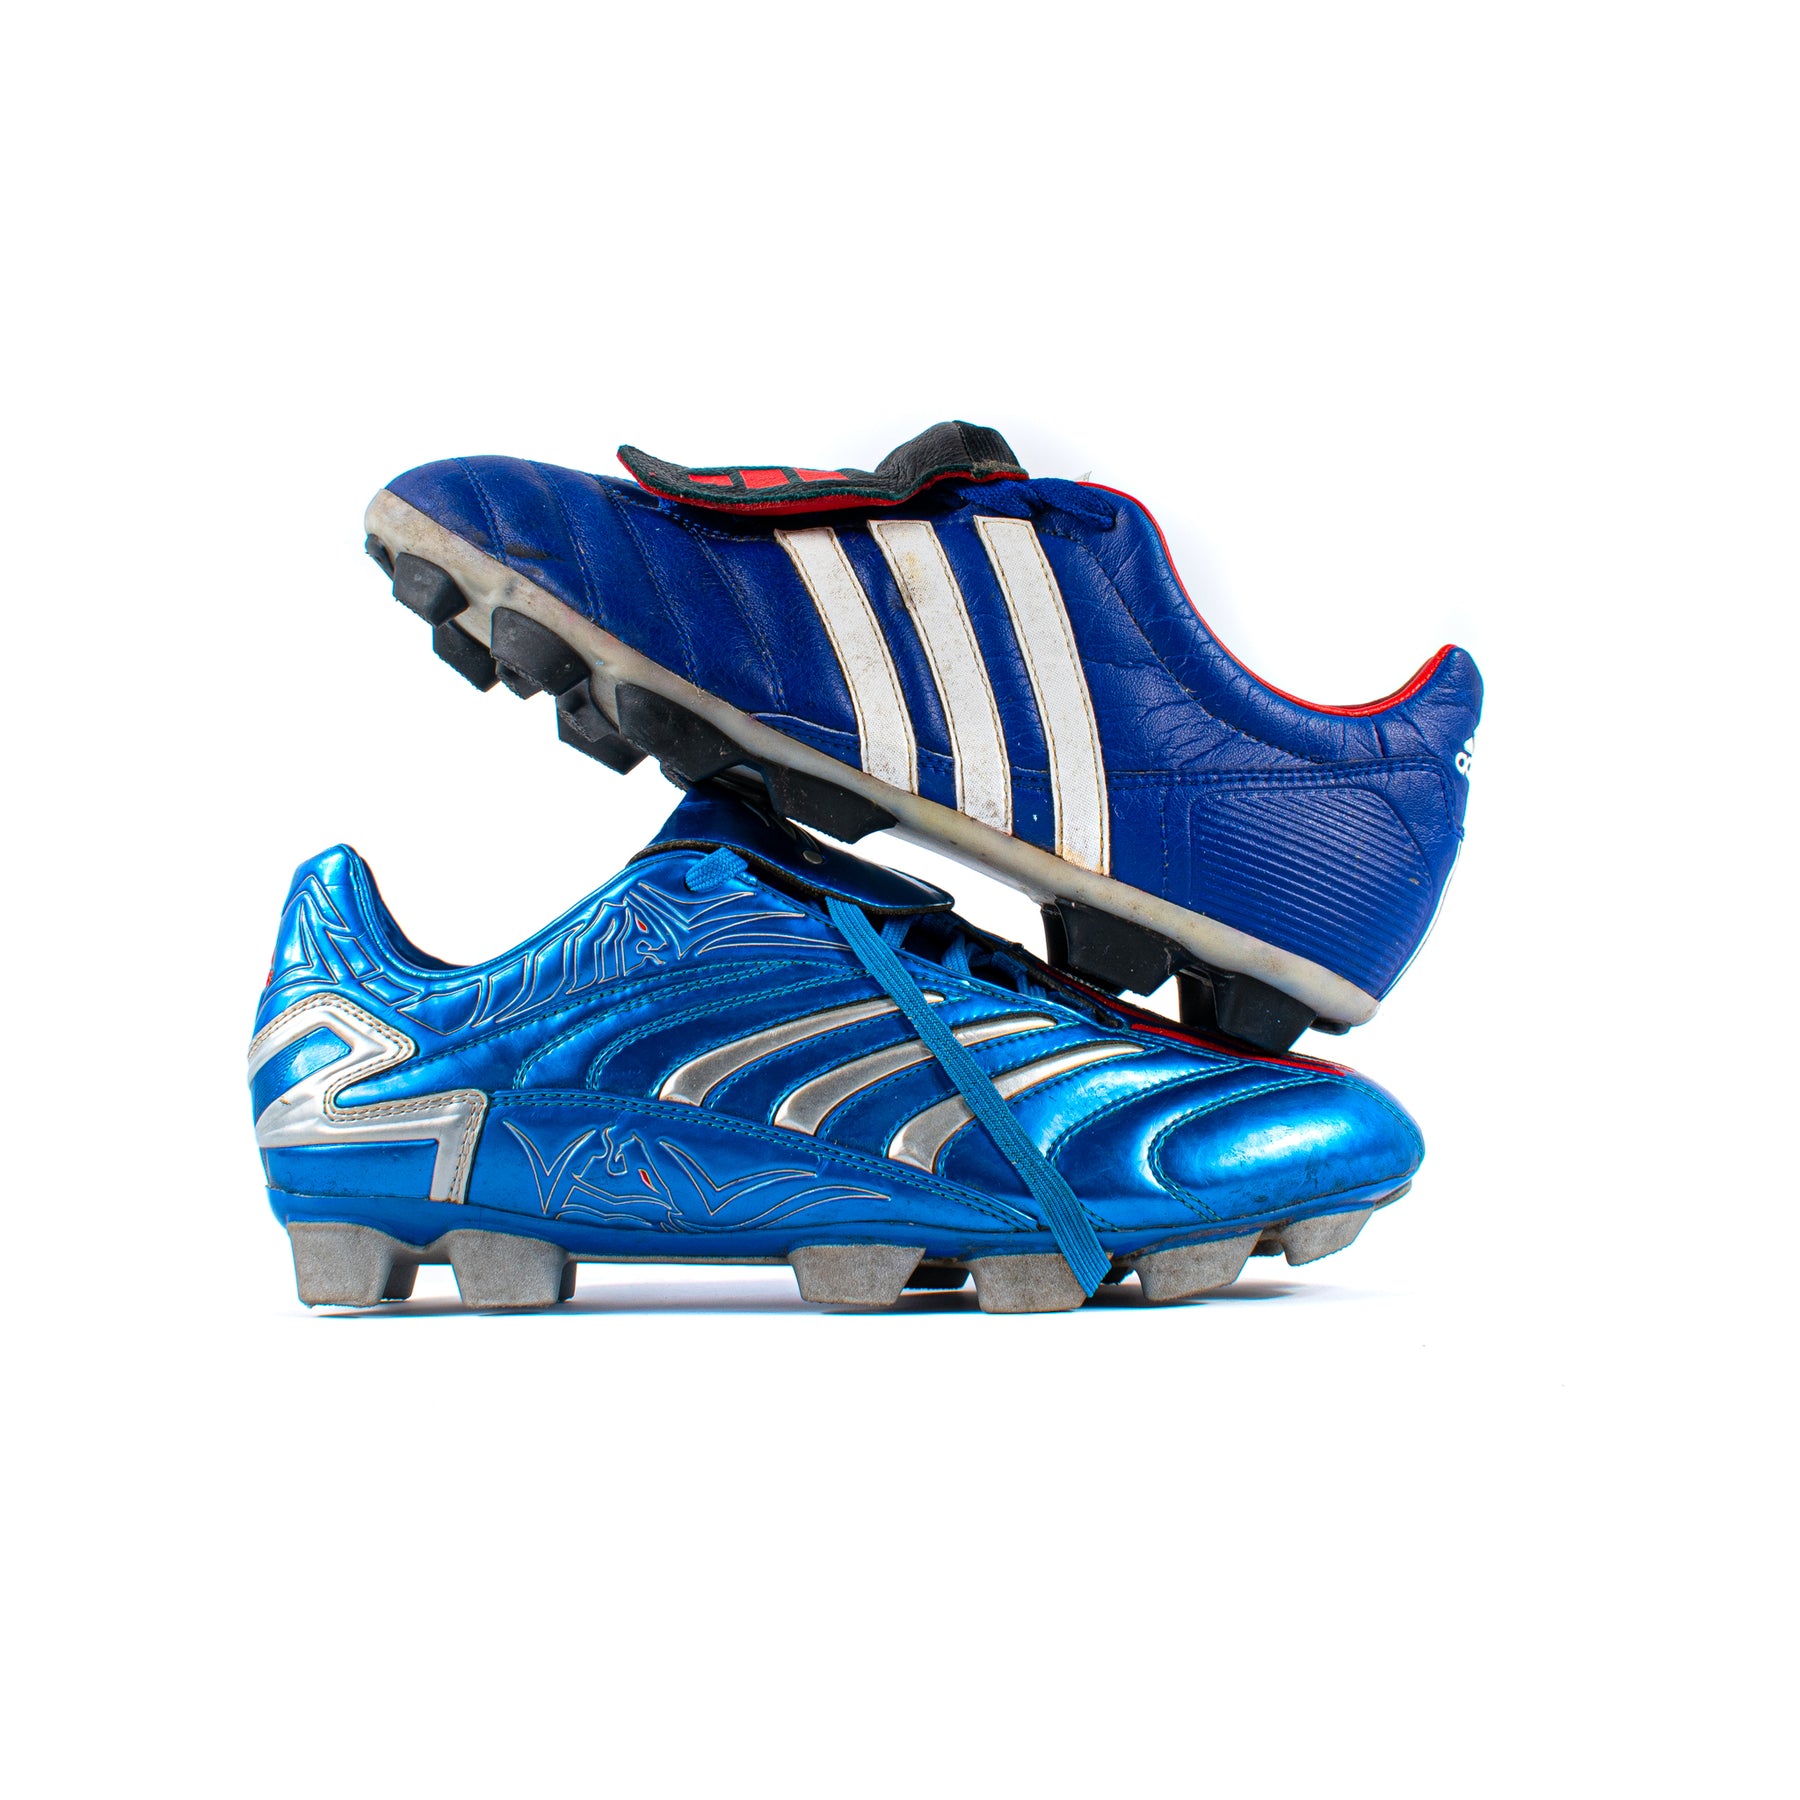 Behandeling mannetje kralen Adidas Predator Manado Japan Blue / Absolion HG – Classic Soccer Cleats